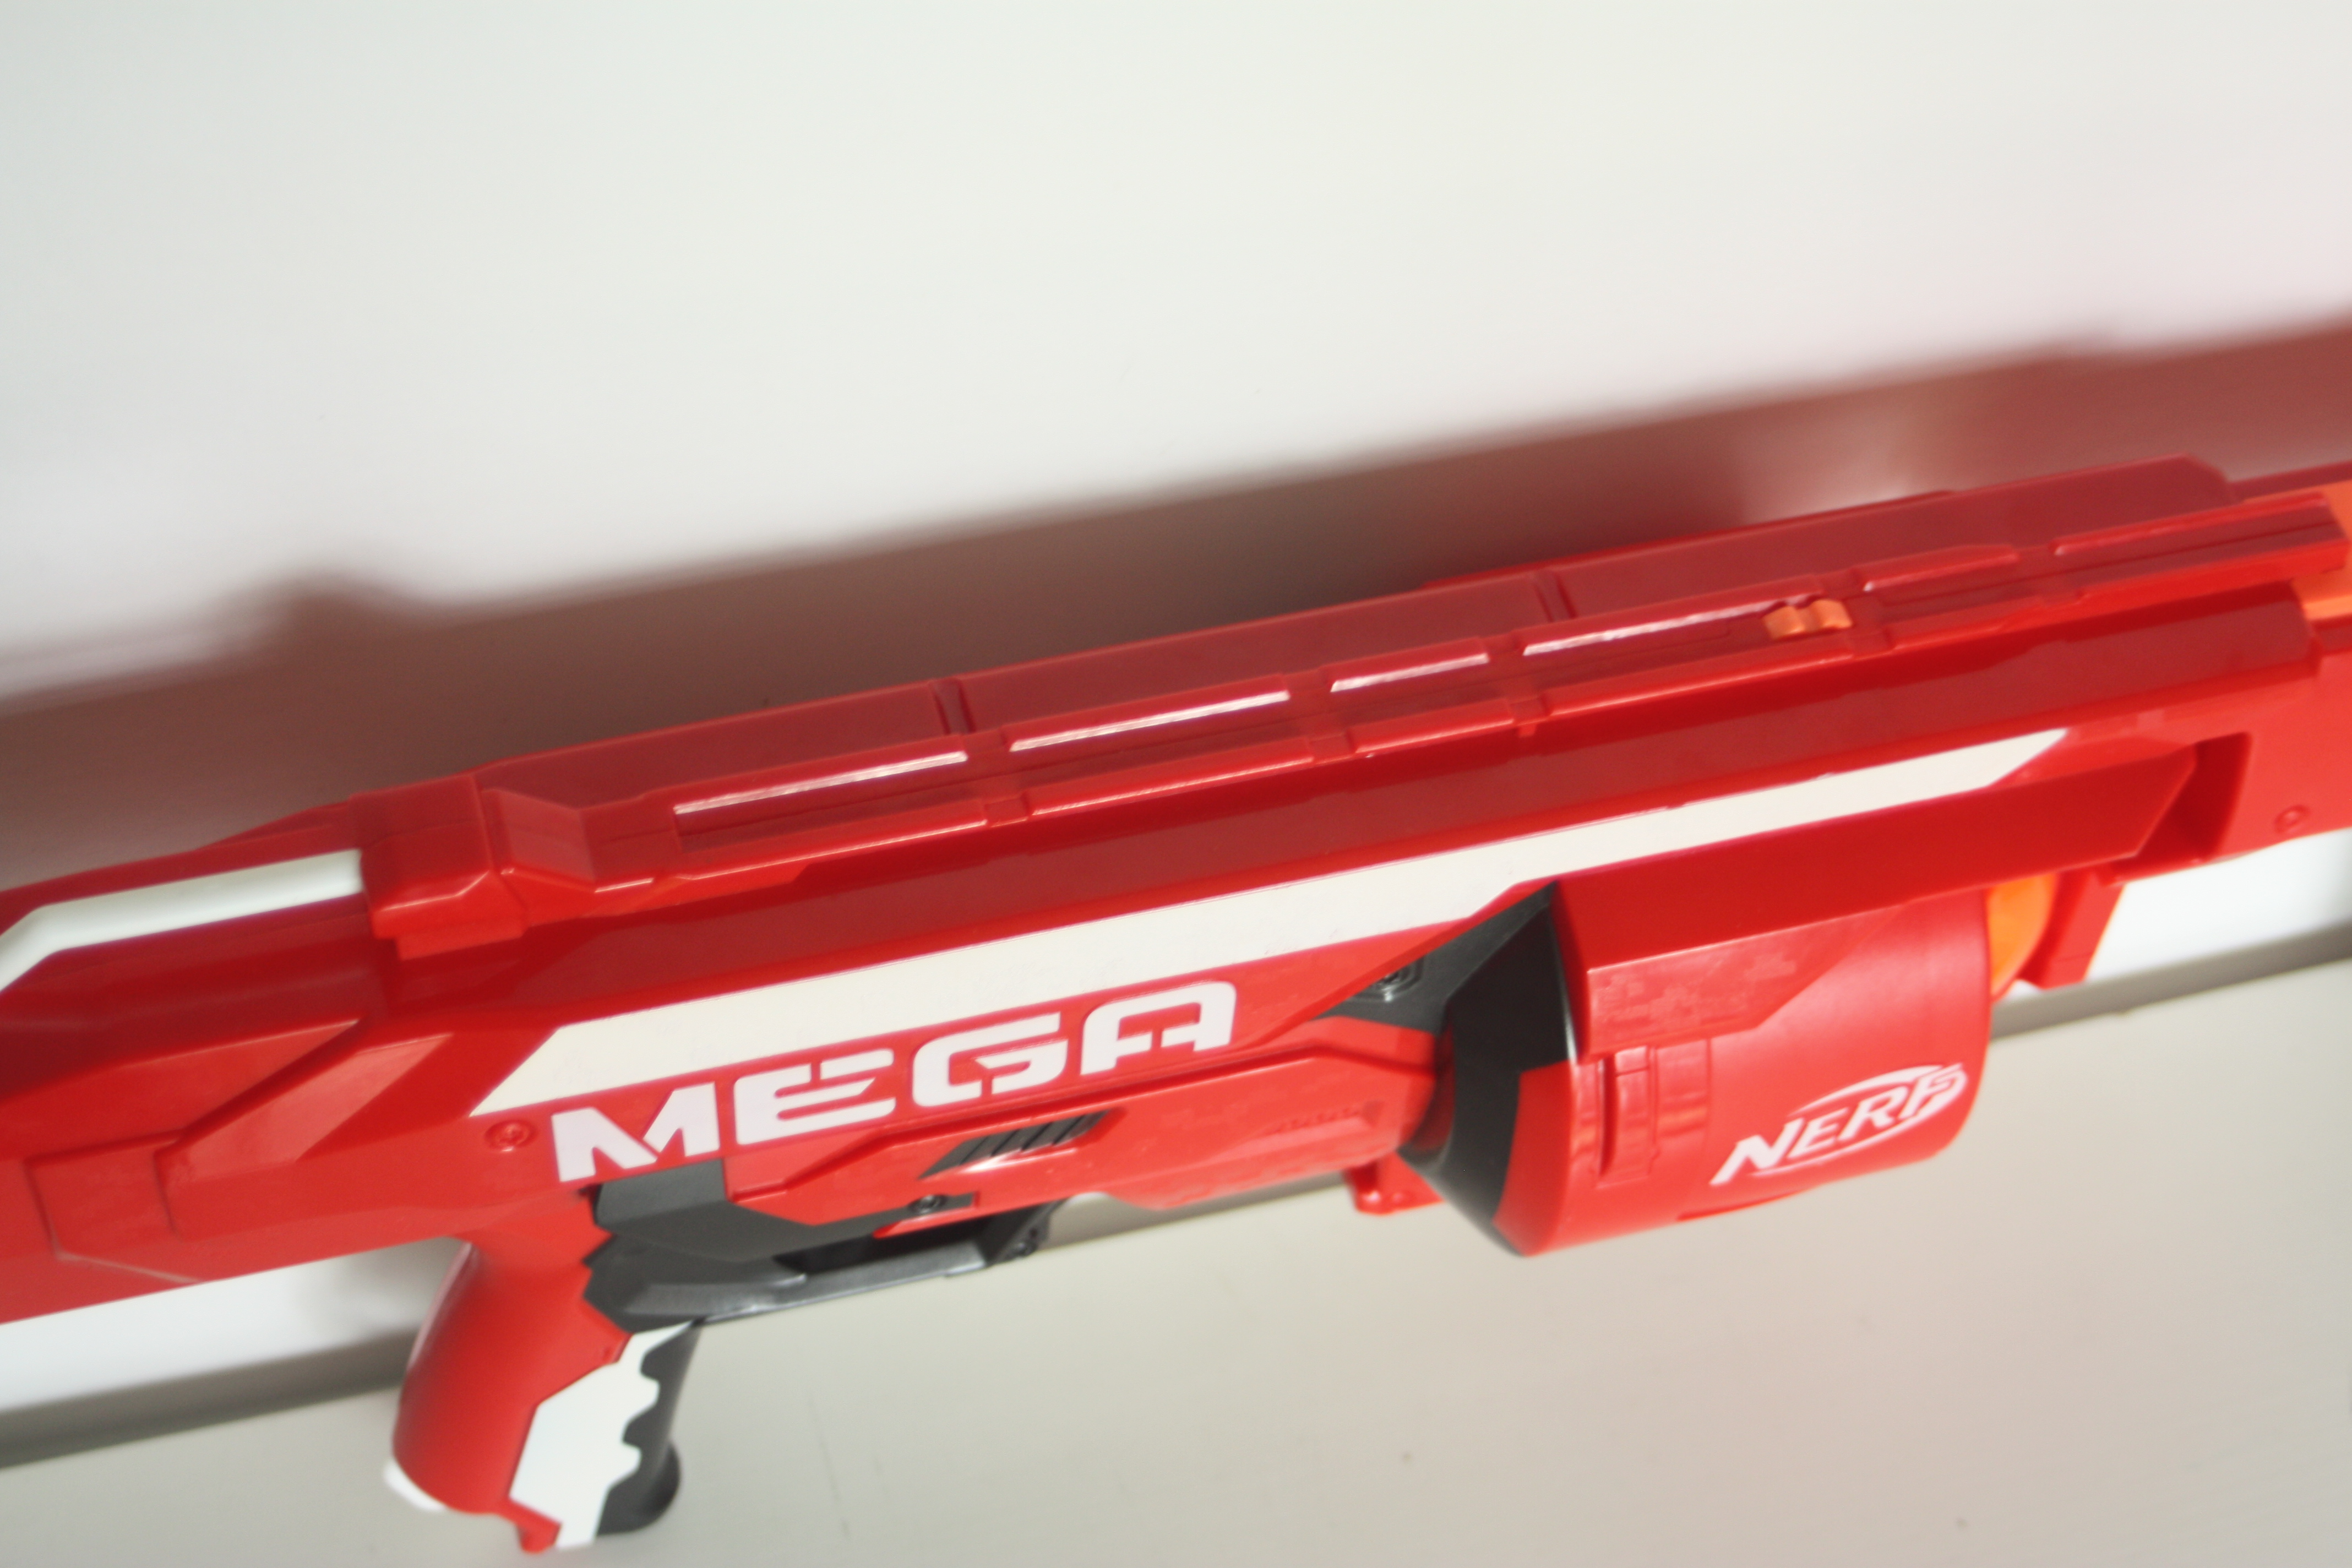 Nerf Mega Rotofury Blaster Tested Working With 6 Dart's